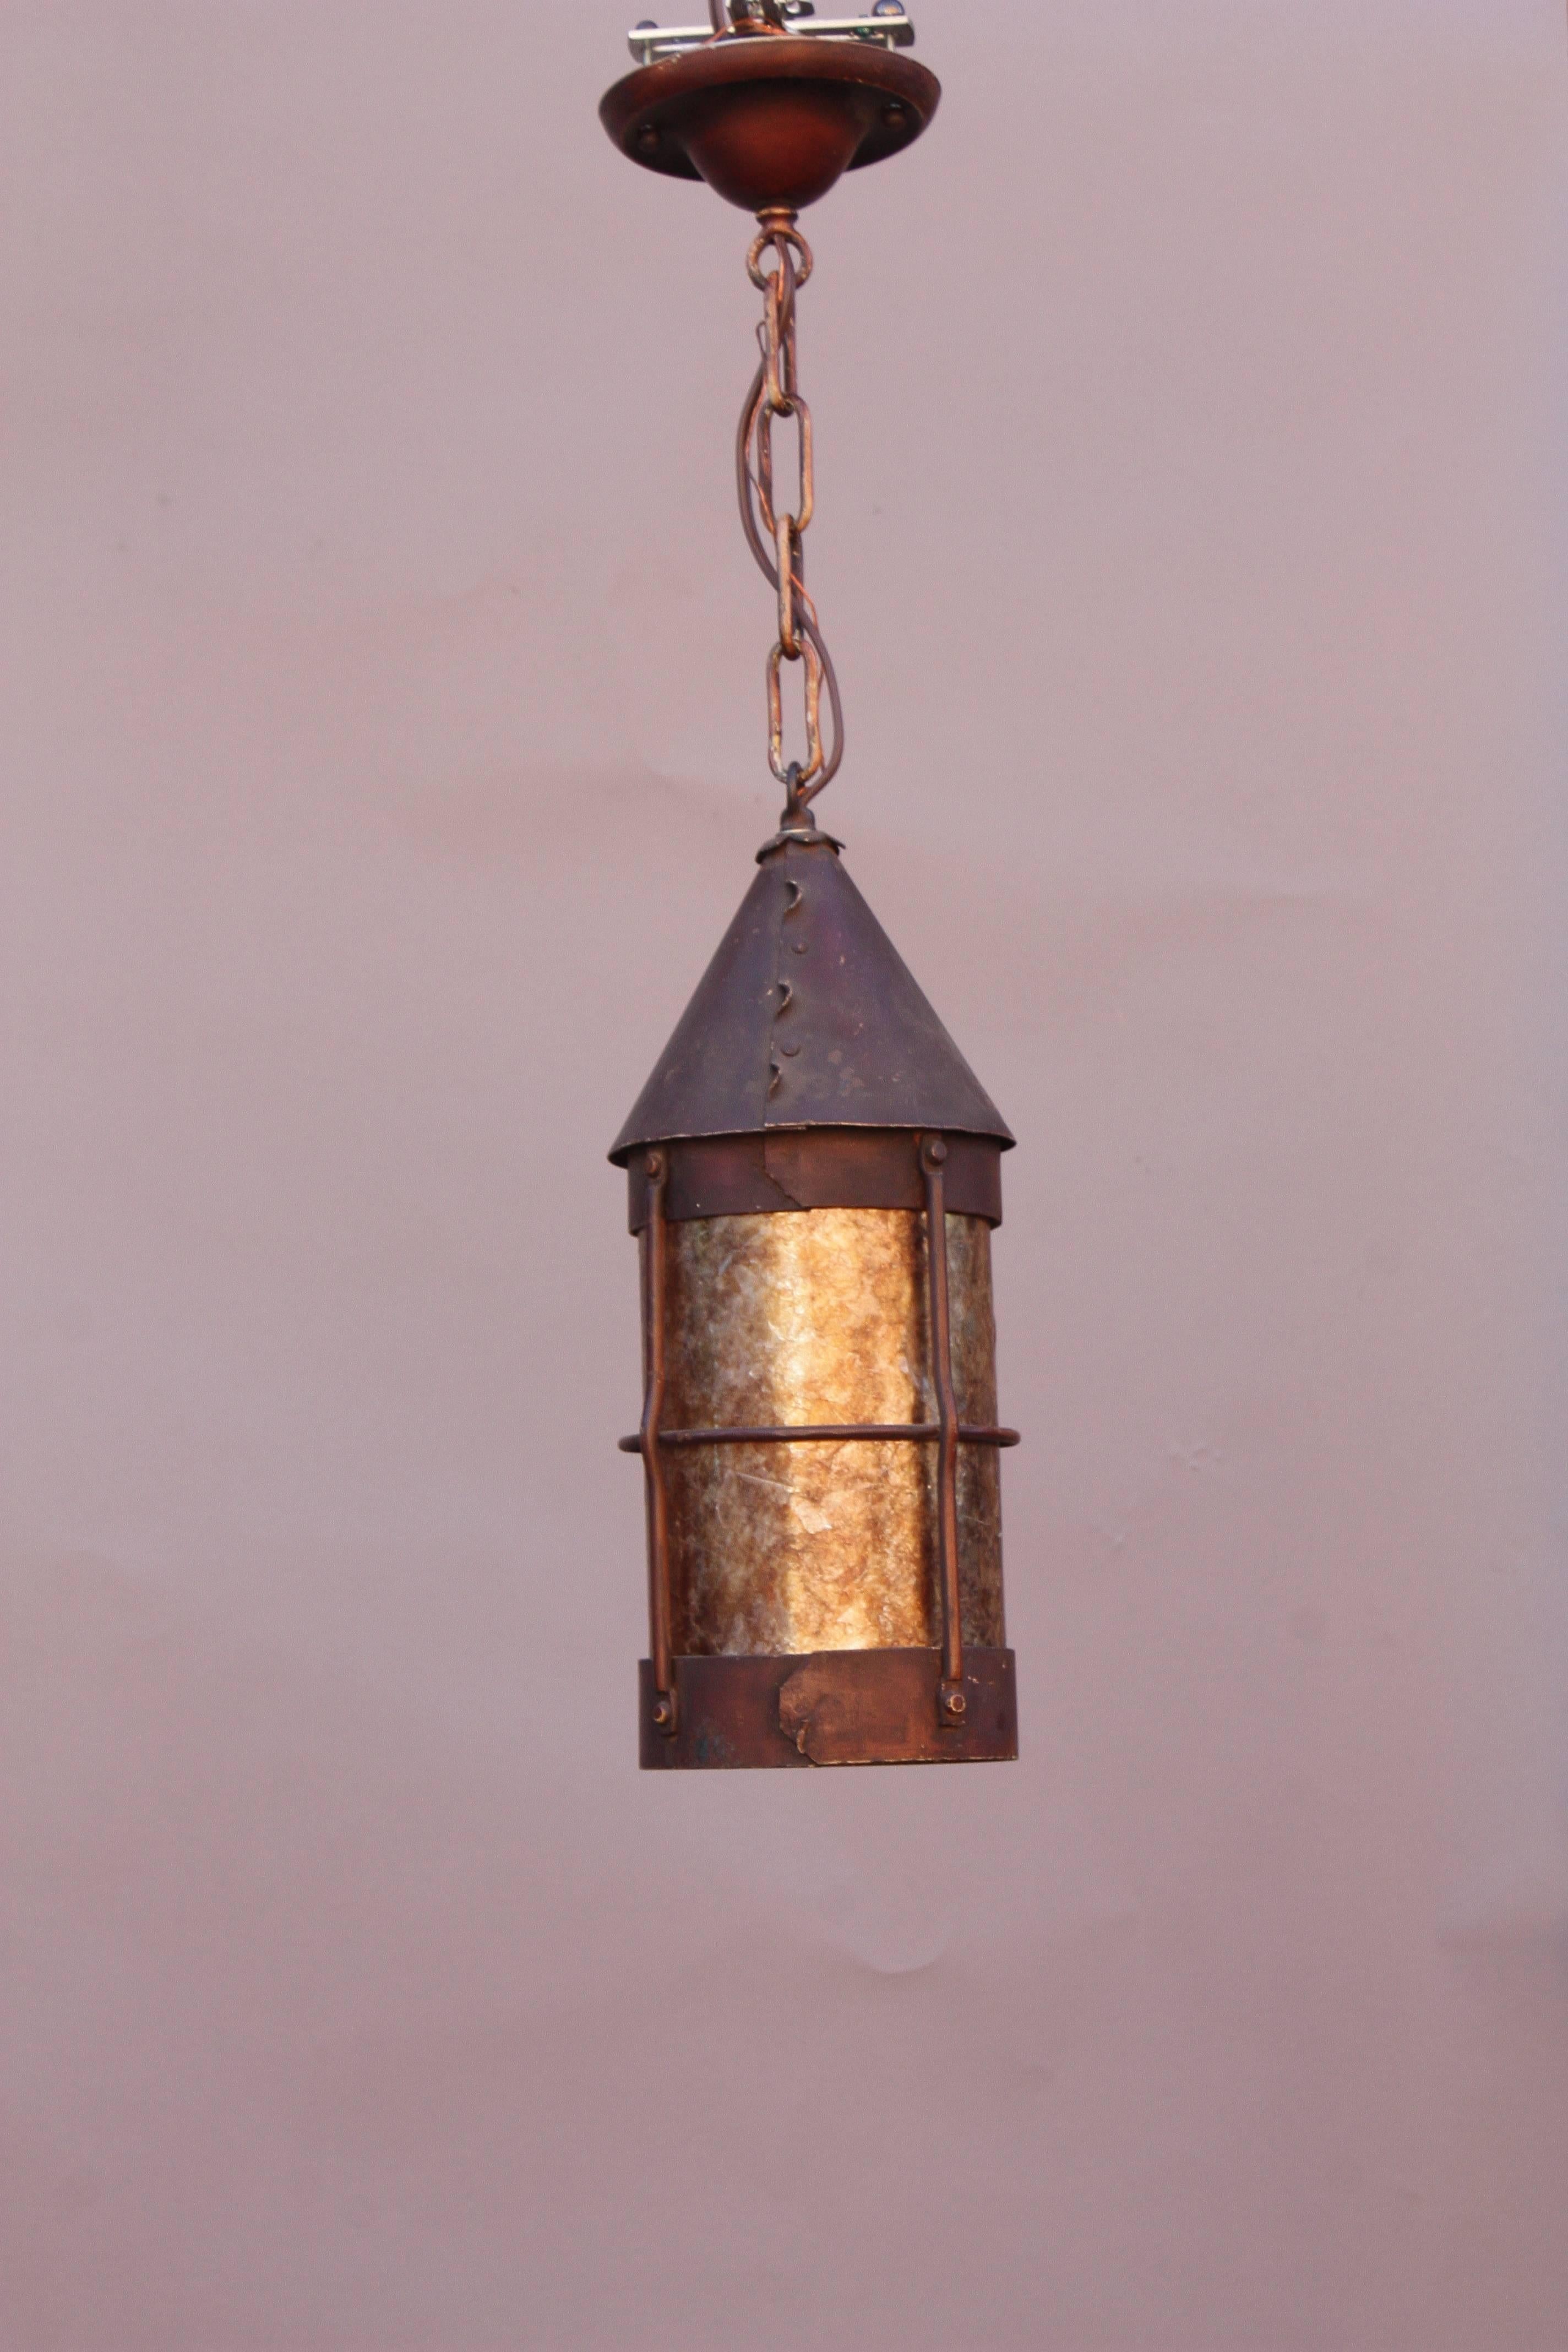 Arts & Crafts period iron pendant light with mica, circa 1910.